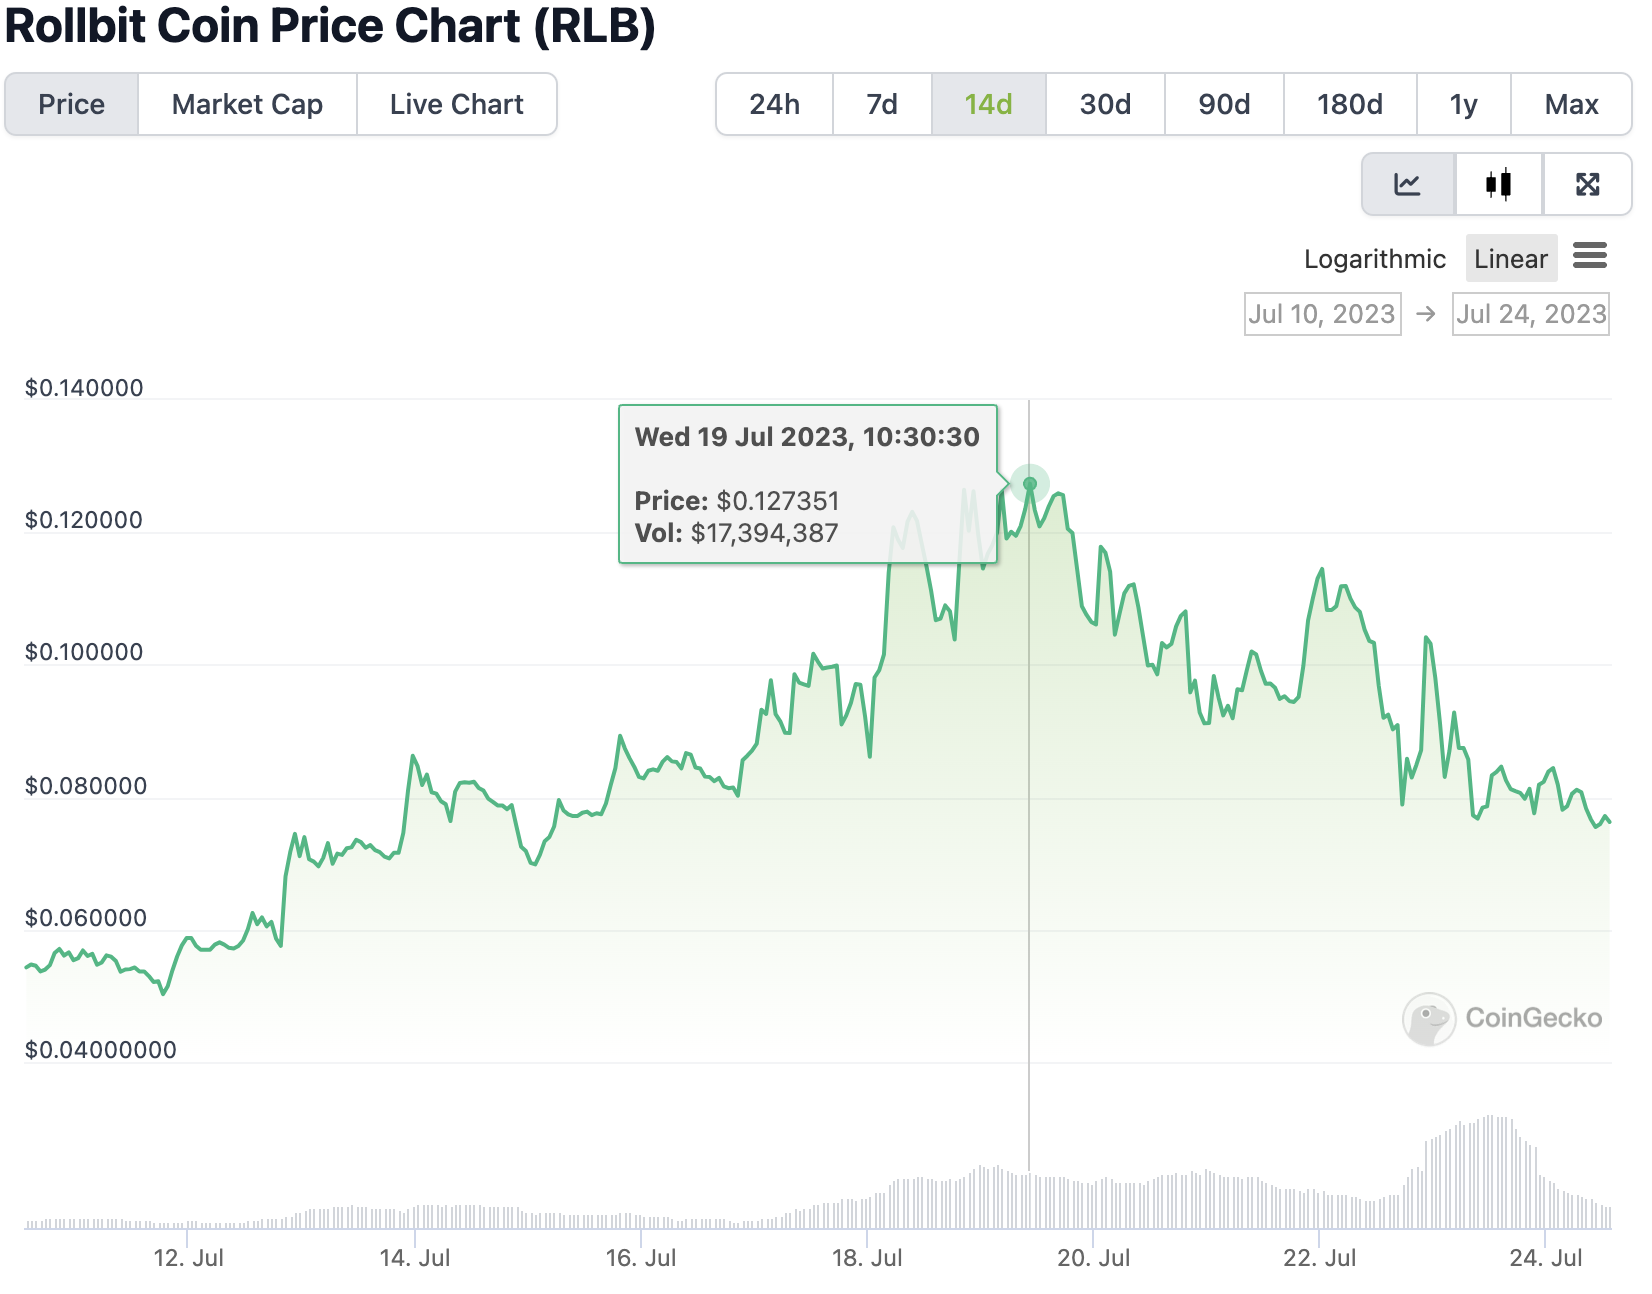 RLB price chart